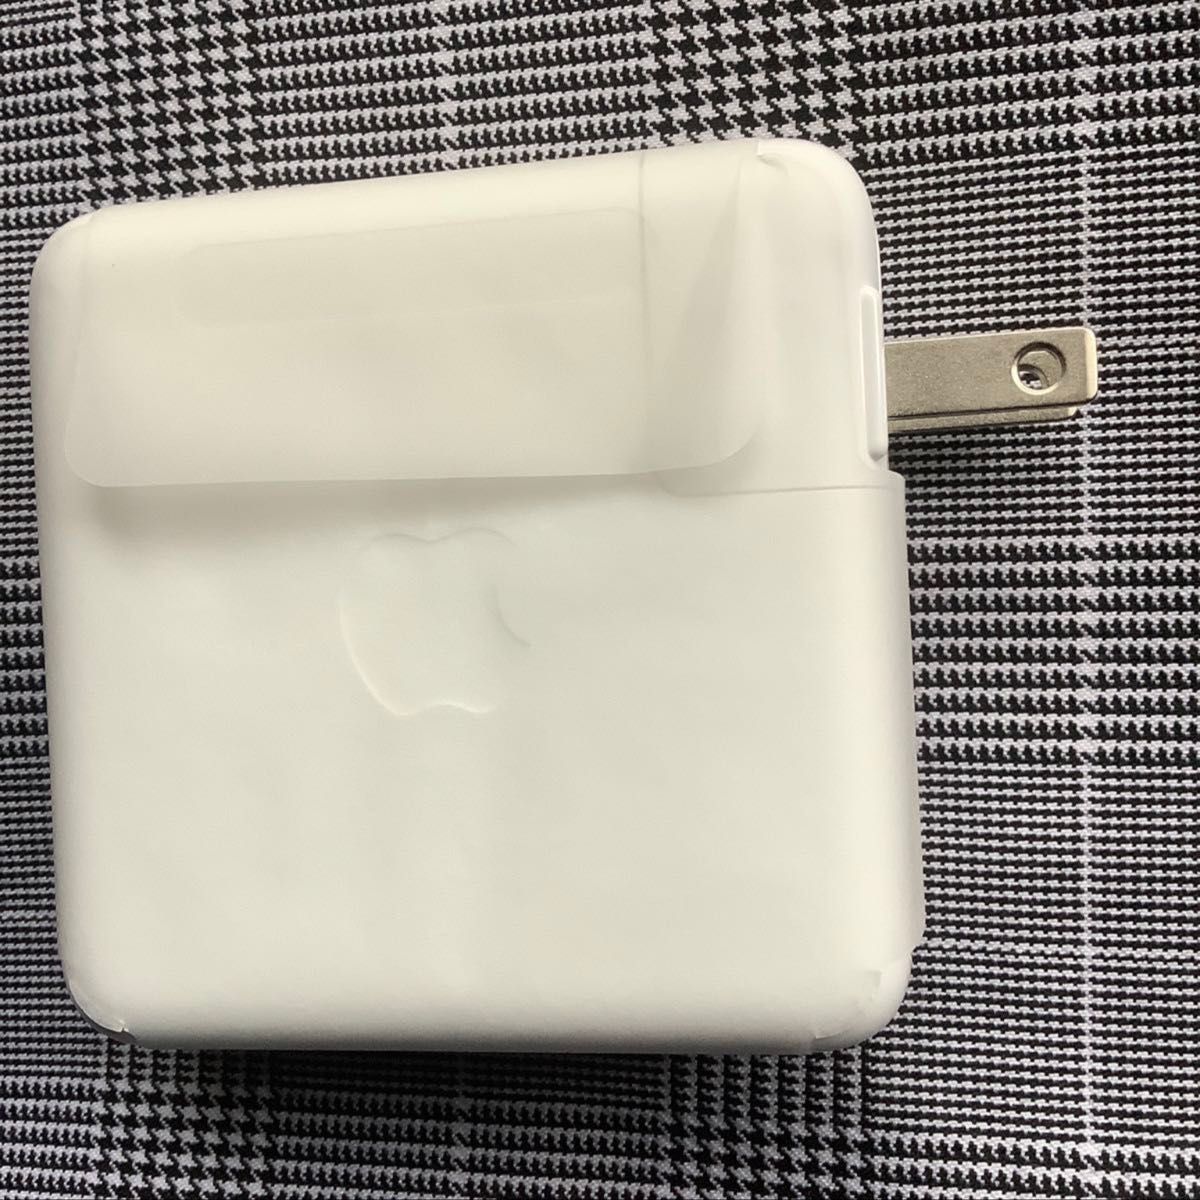 Apple MacBook Pro 付属品 USB-C電源アダプタ